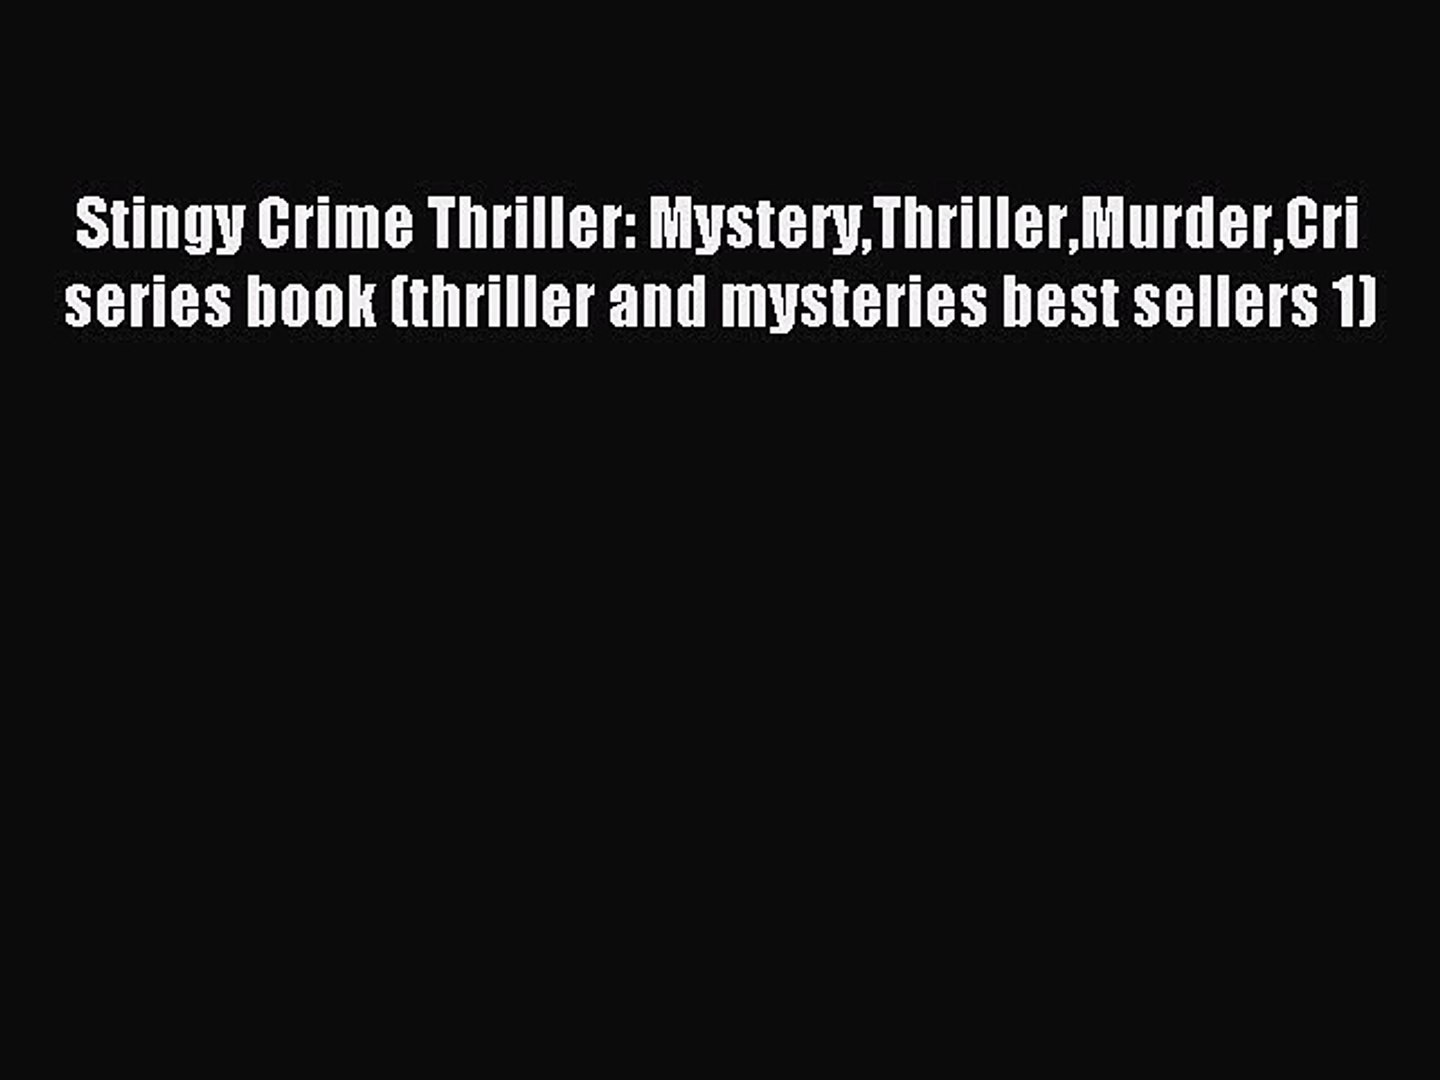 Read Stingy Crime Thriller: MysteryThrillerMurderCri series book (thriller and mysteries best